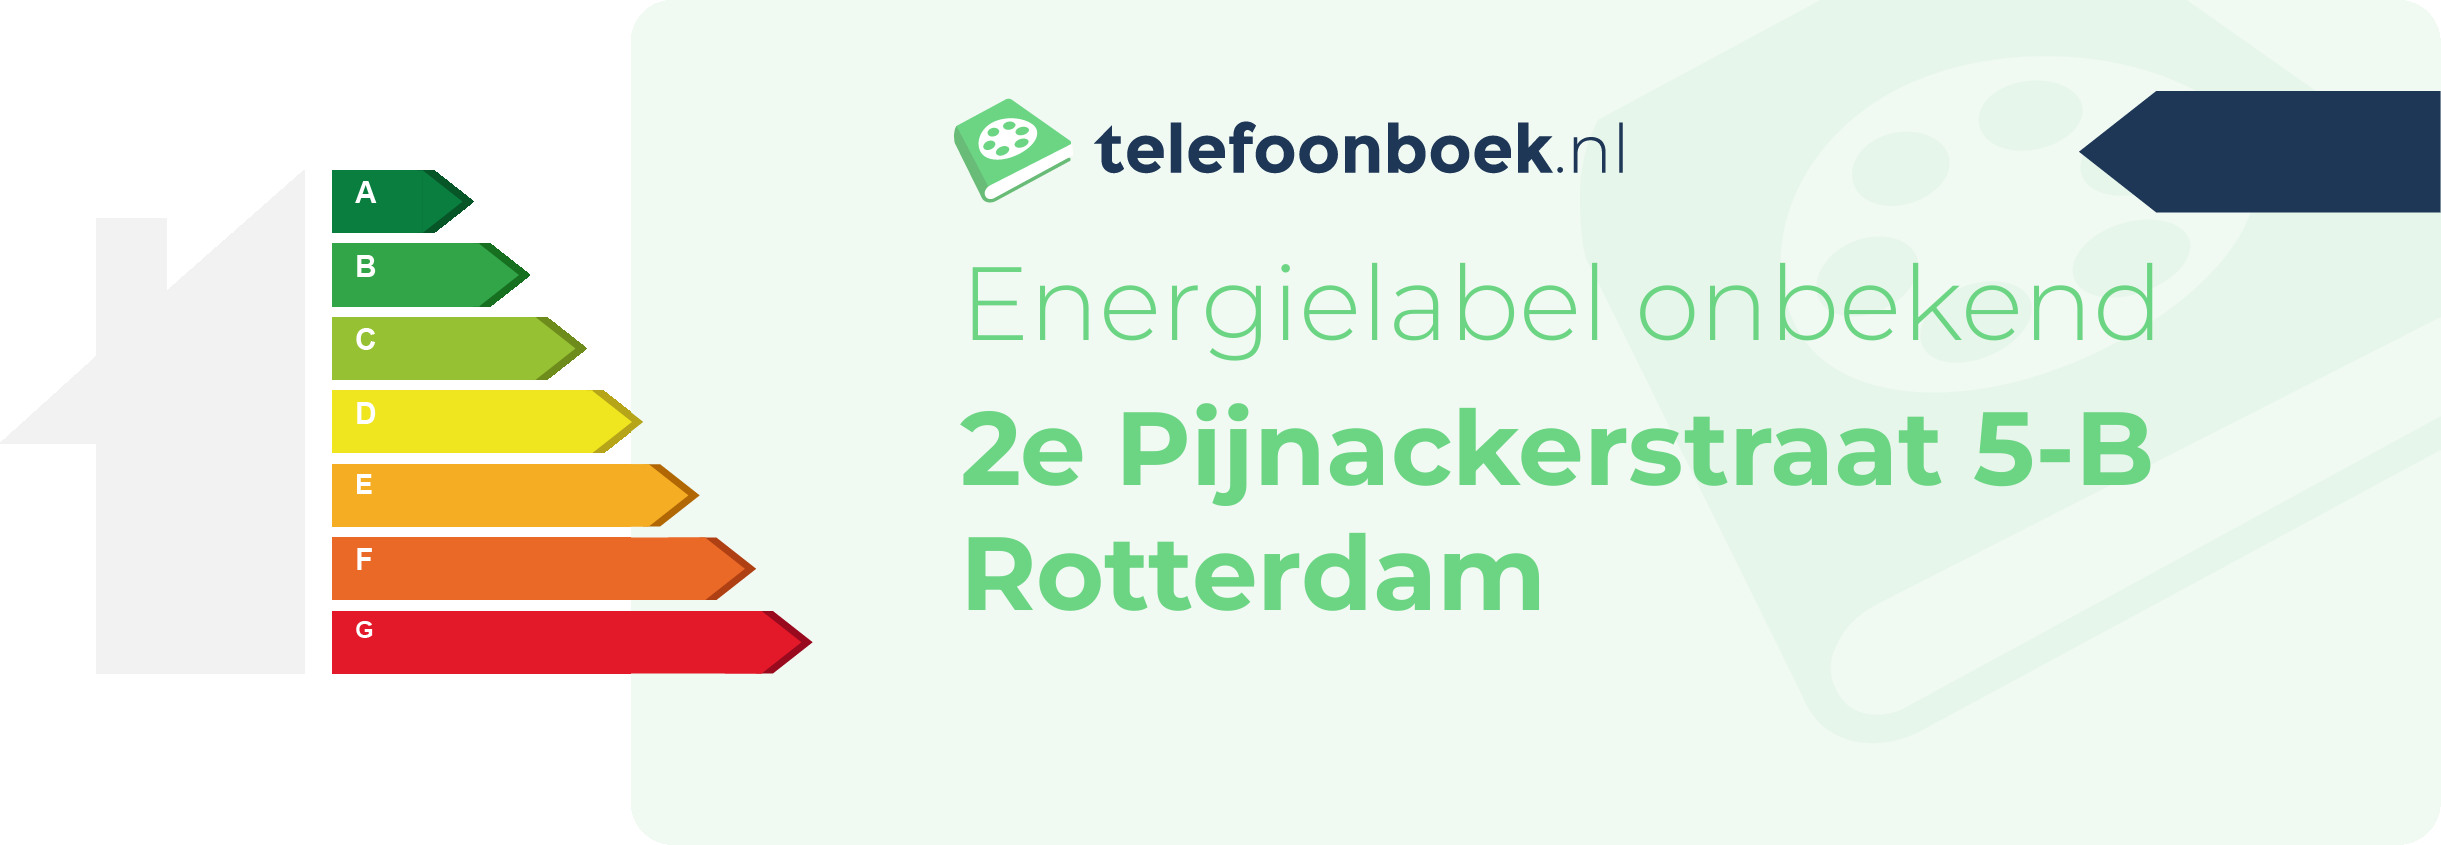 Energielabel 2e Pijnackerstraat 5-B Rotterdam